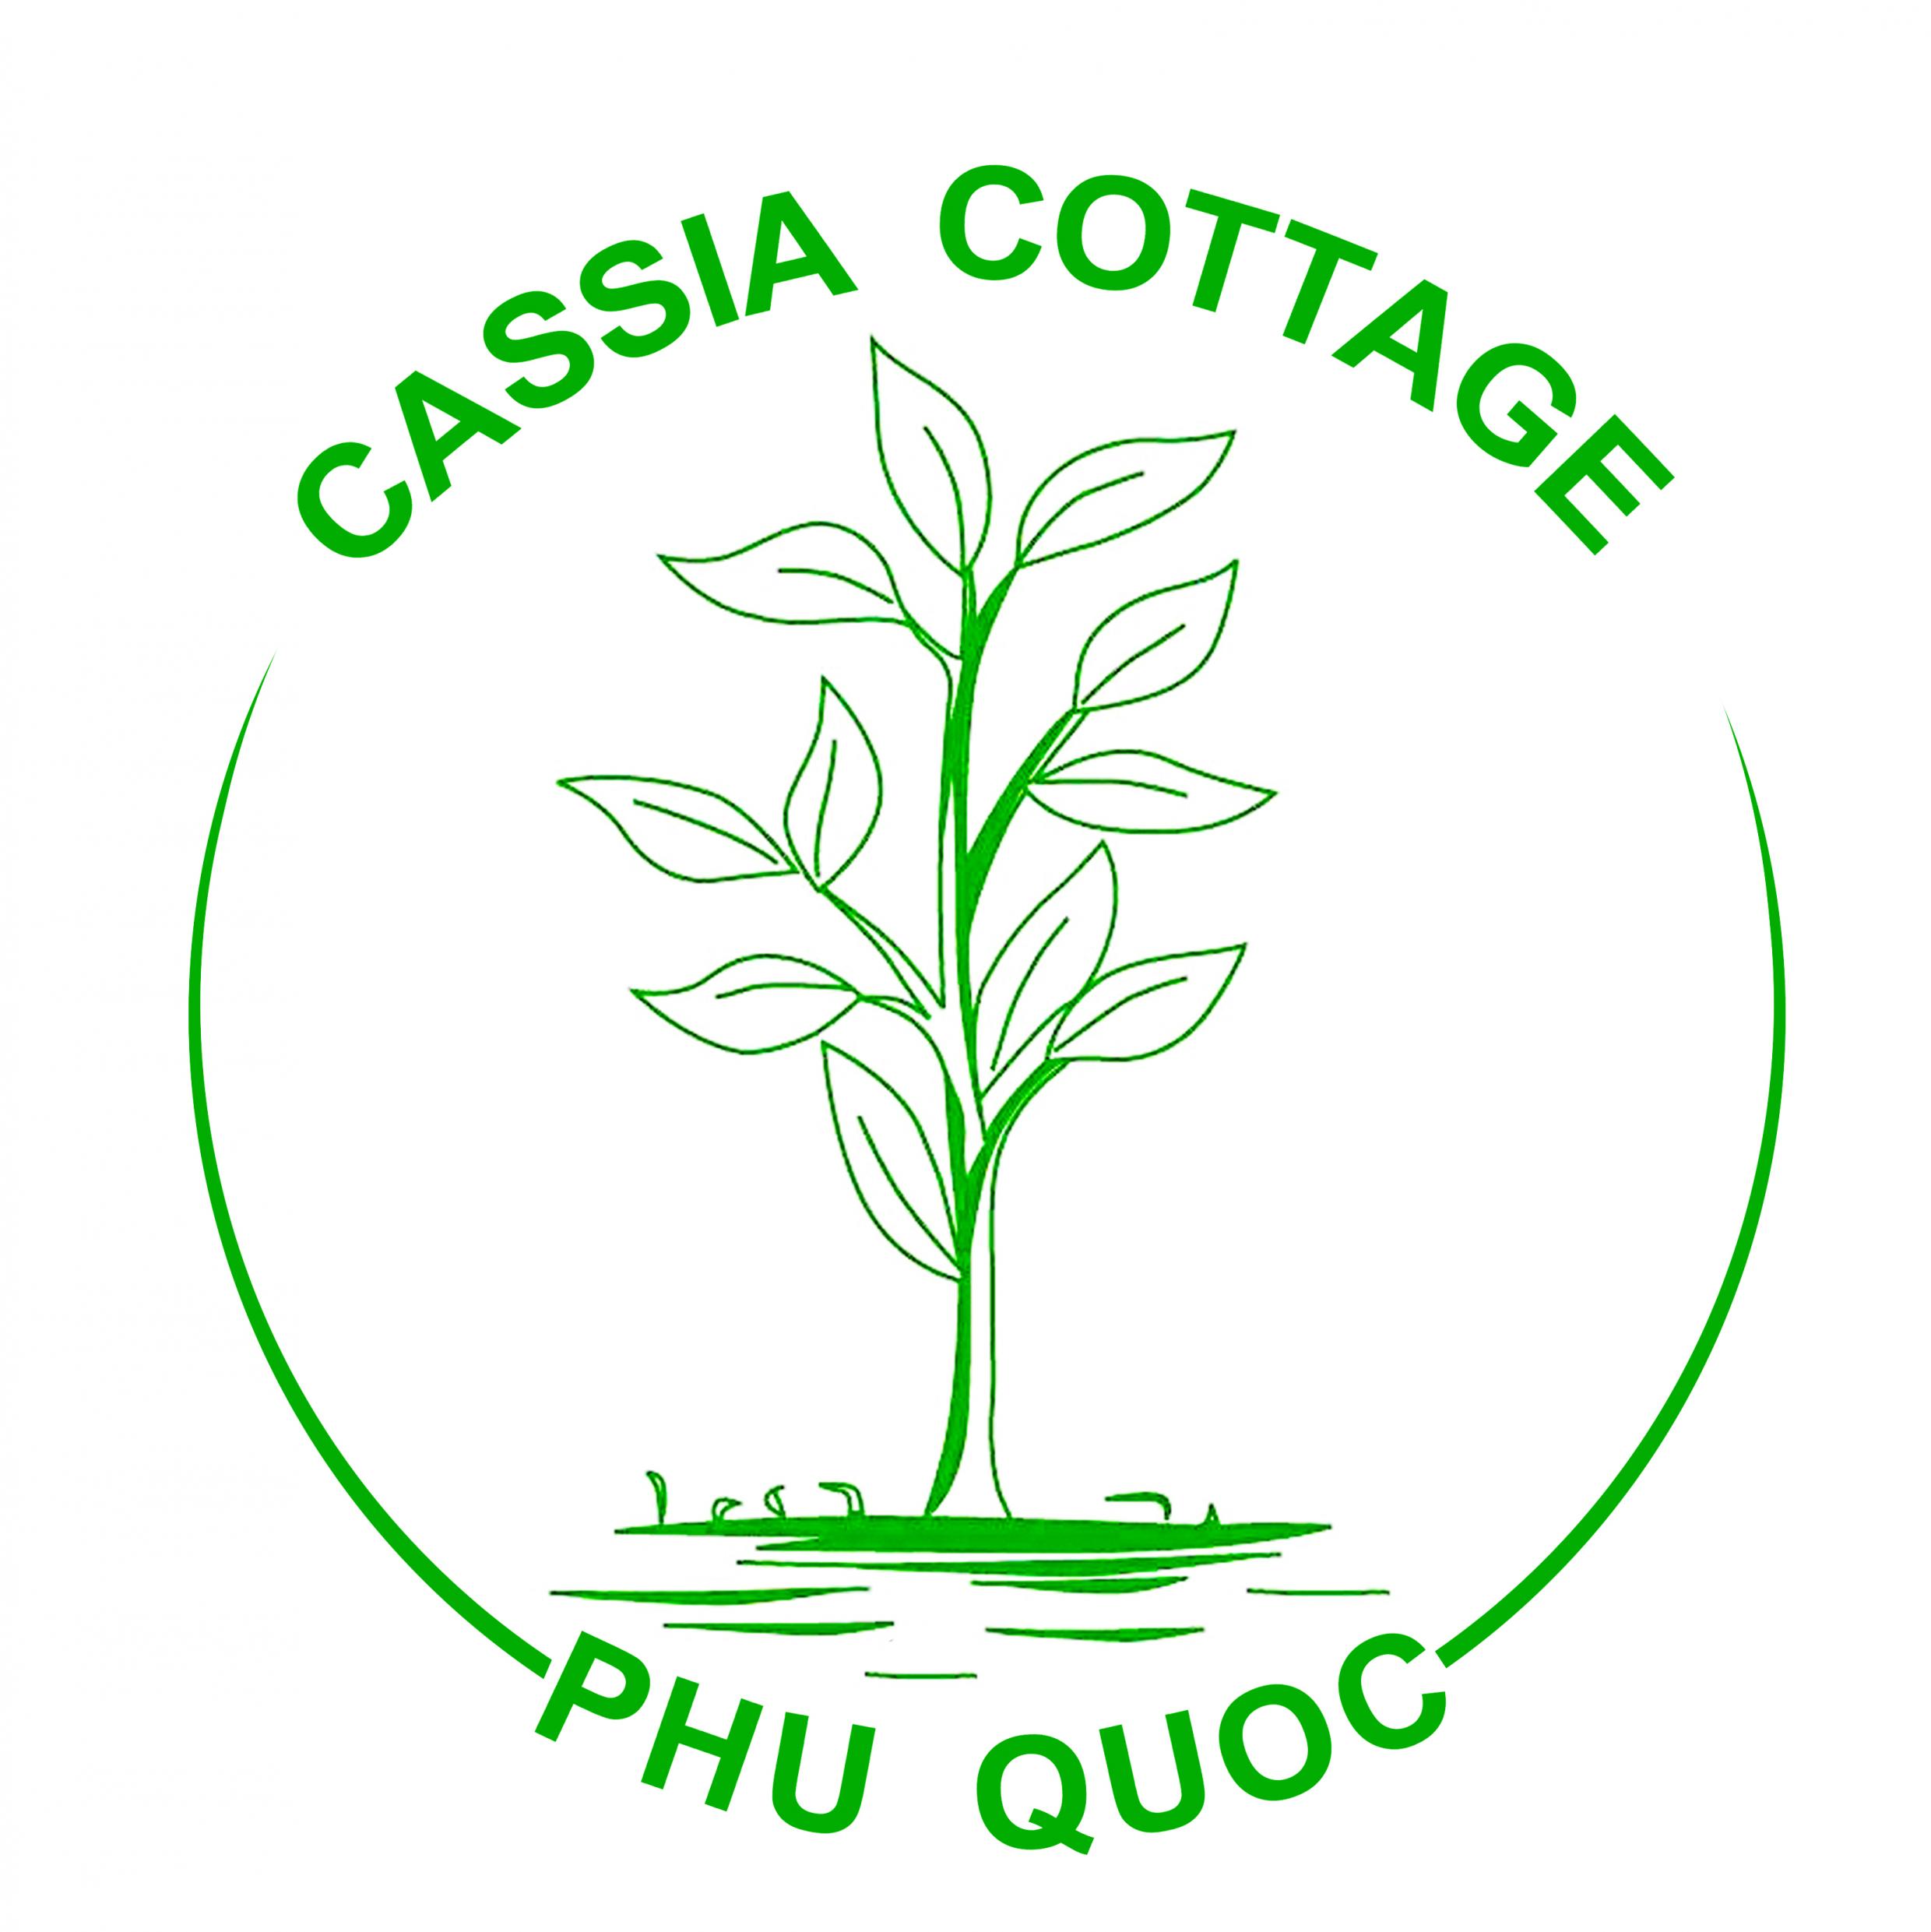 Cassia Cottage